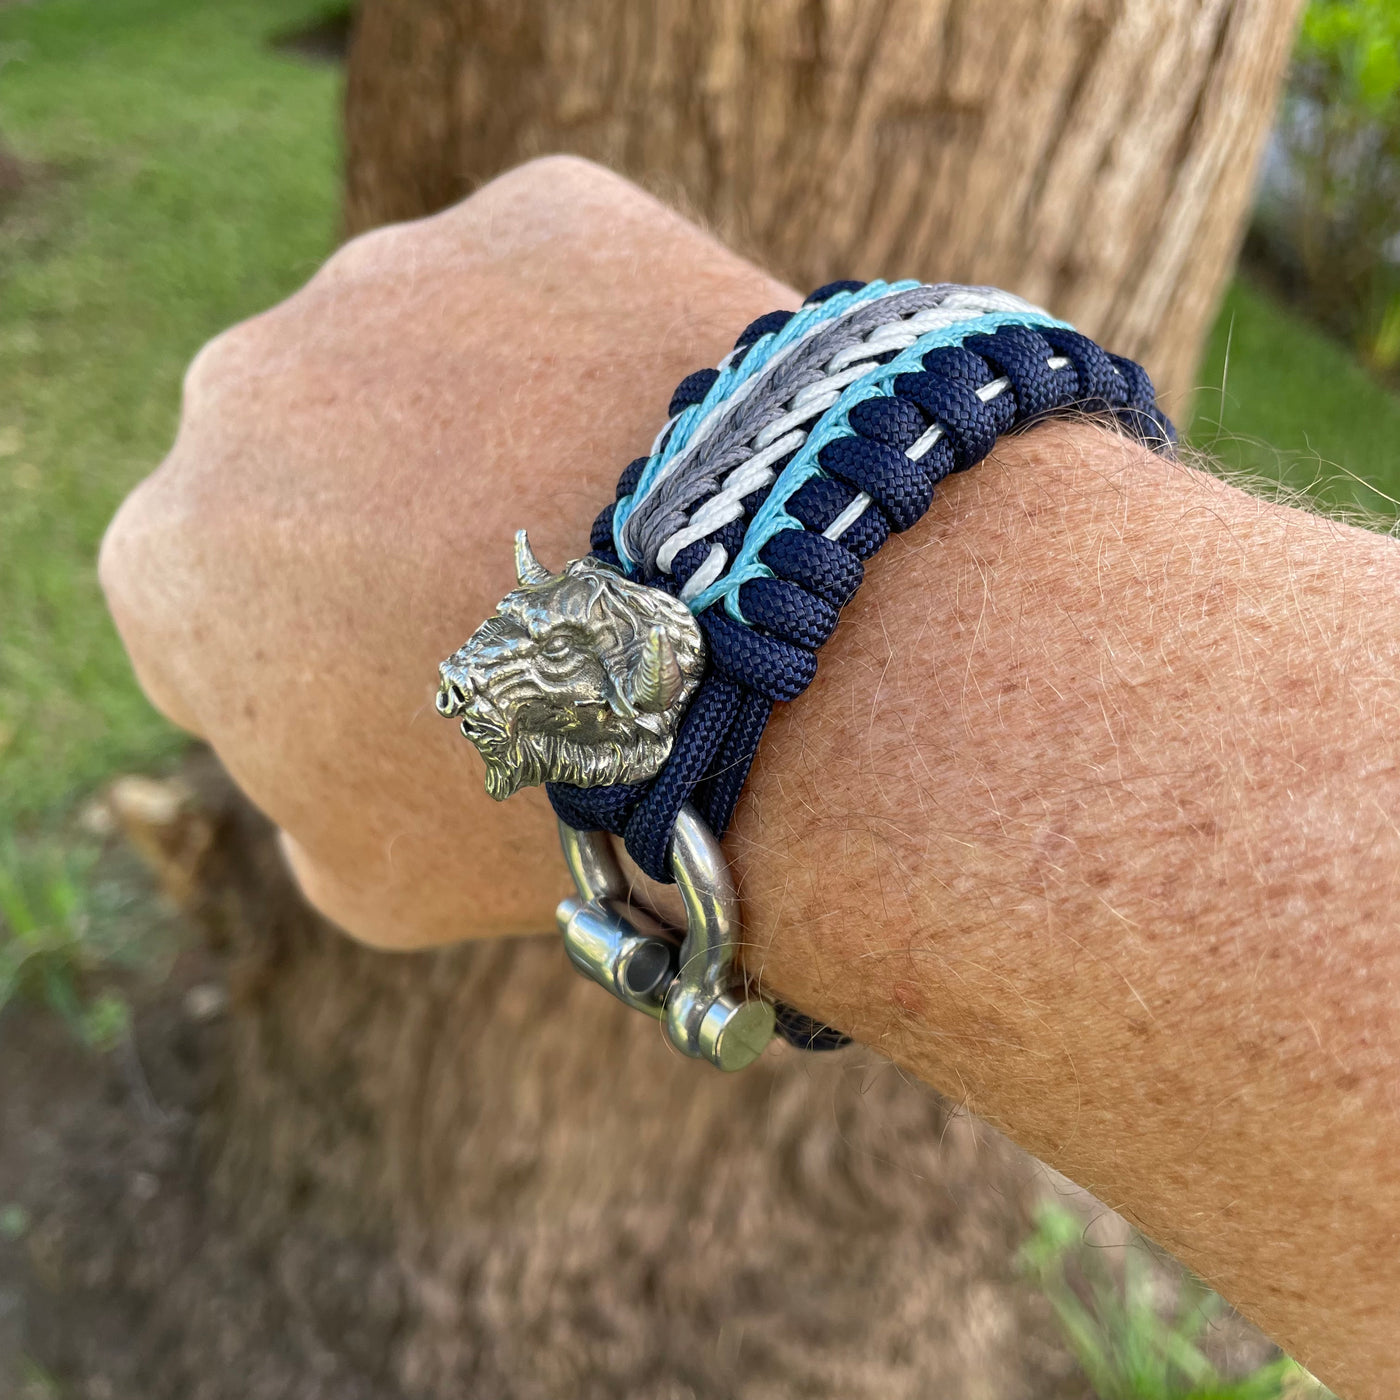 Decorated Bull bracelet